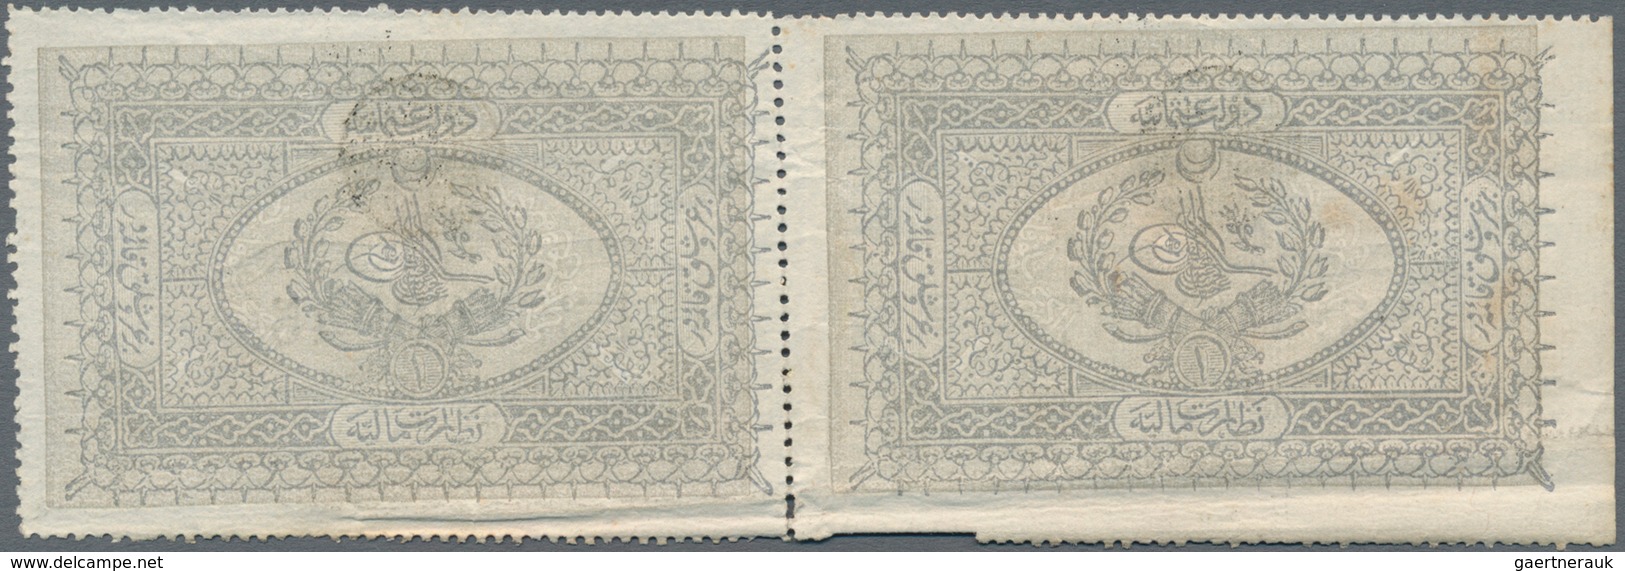 Turkey / Türkei: Banque Impériale Ottomane Uncut Pair Of 1 Kurus AH 1293-1295 (1876-78), P.46, Stain - Türkei